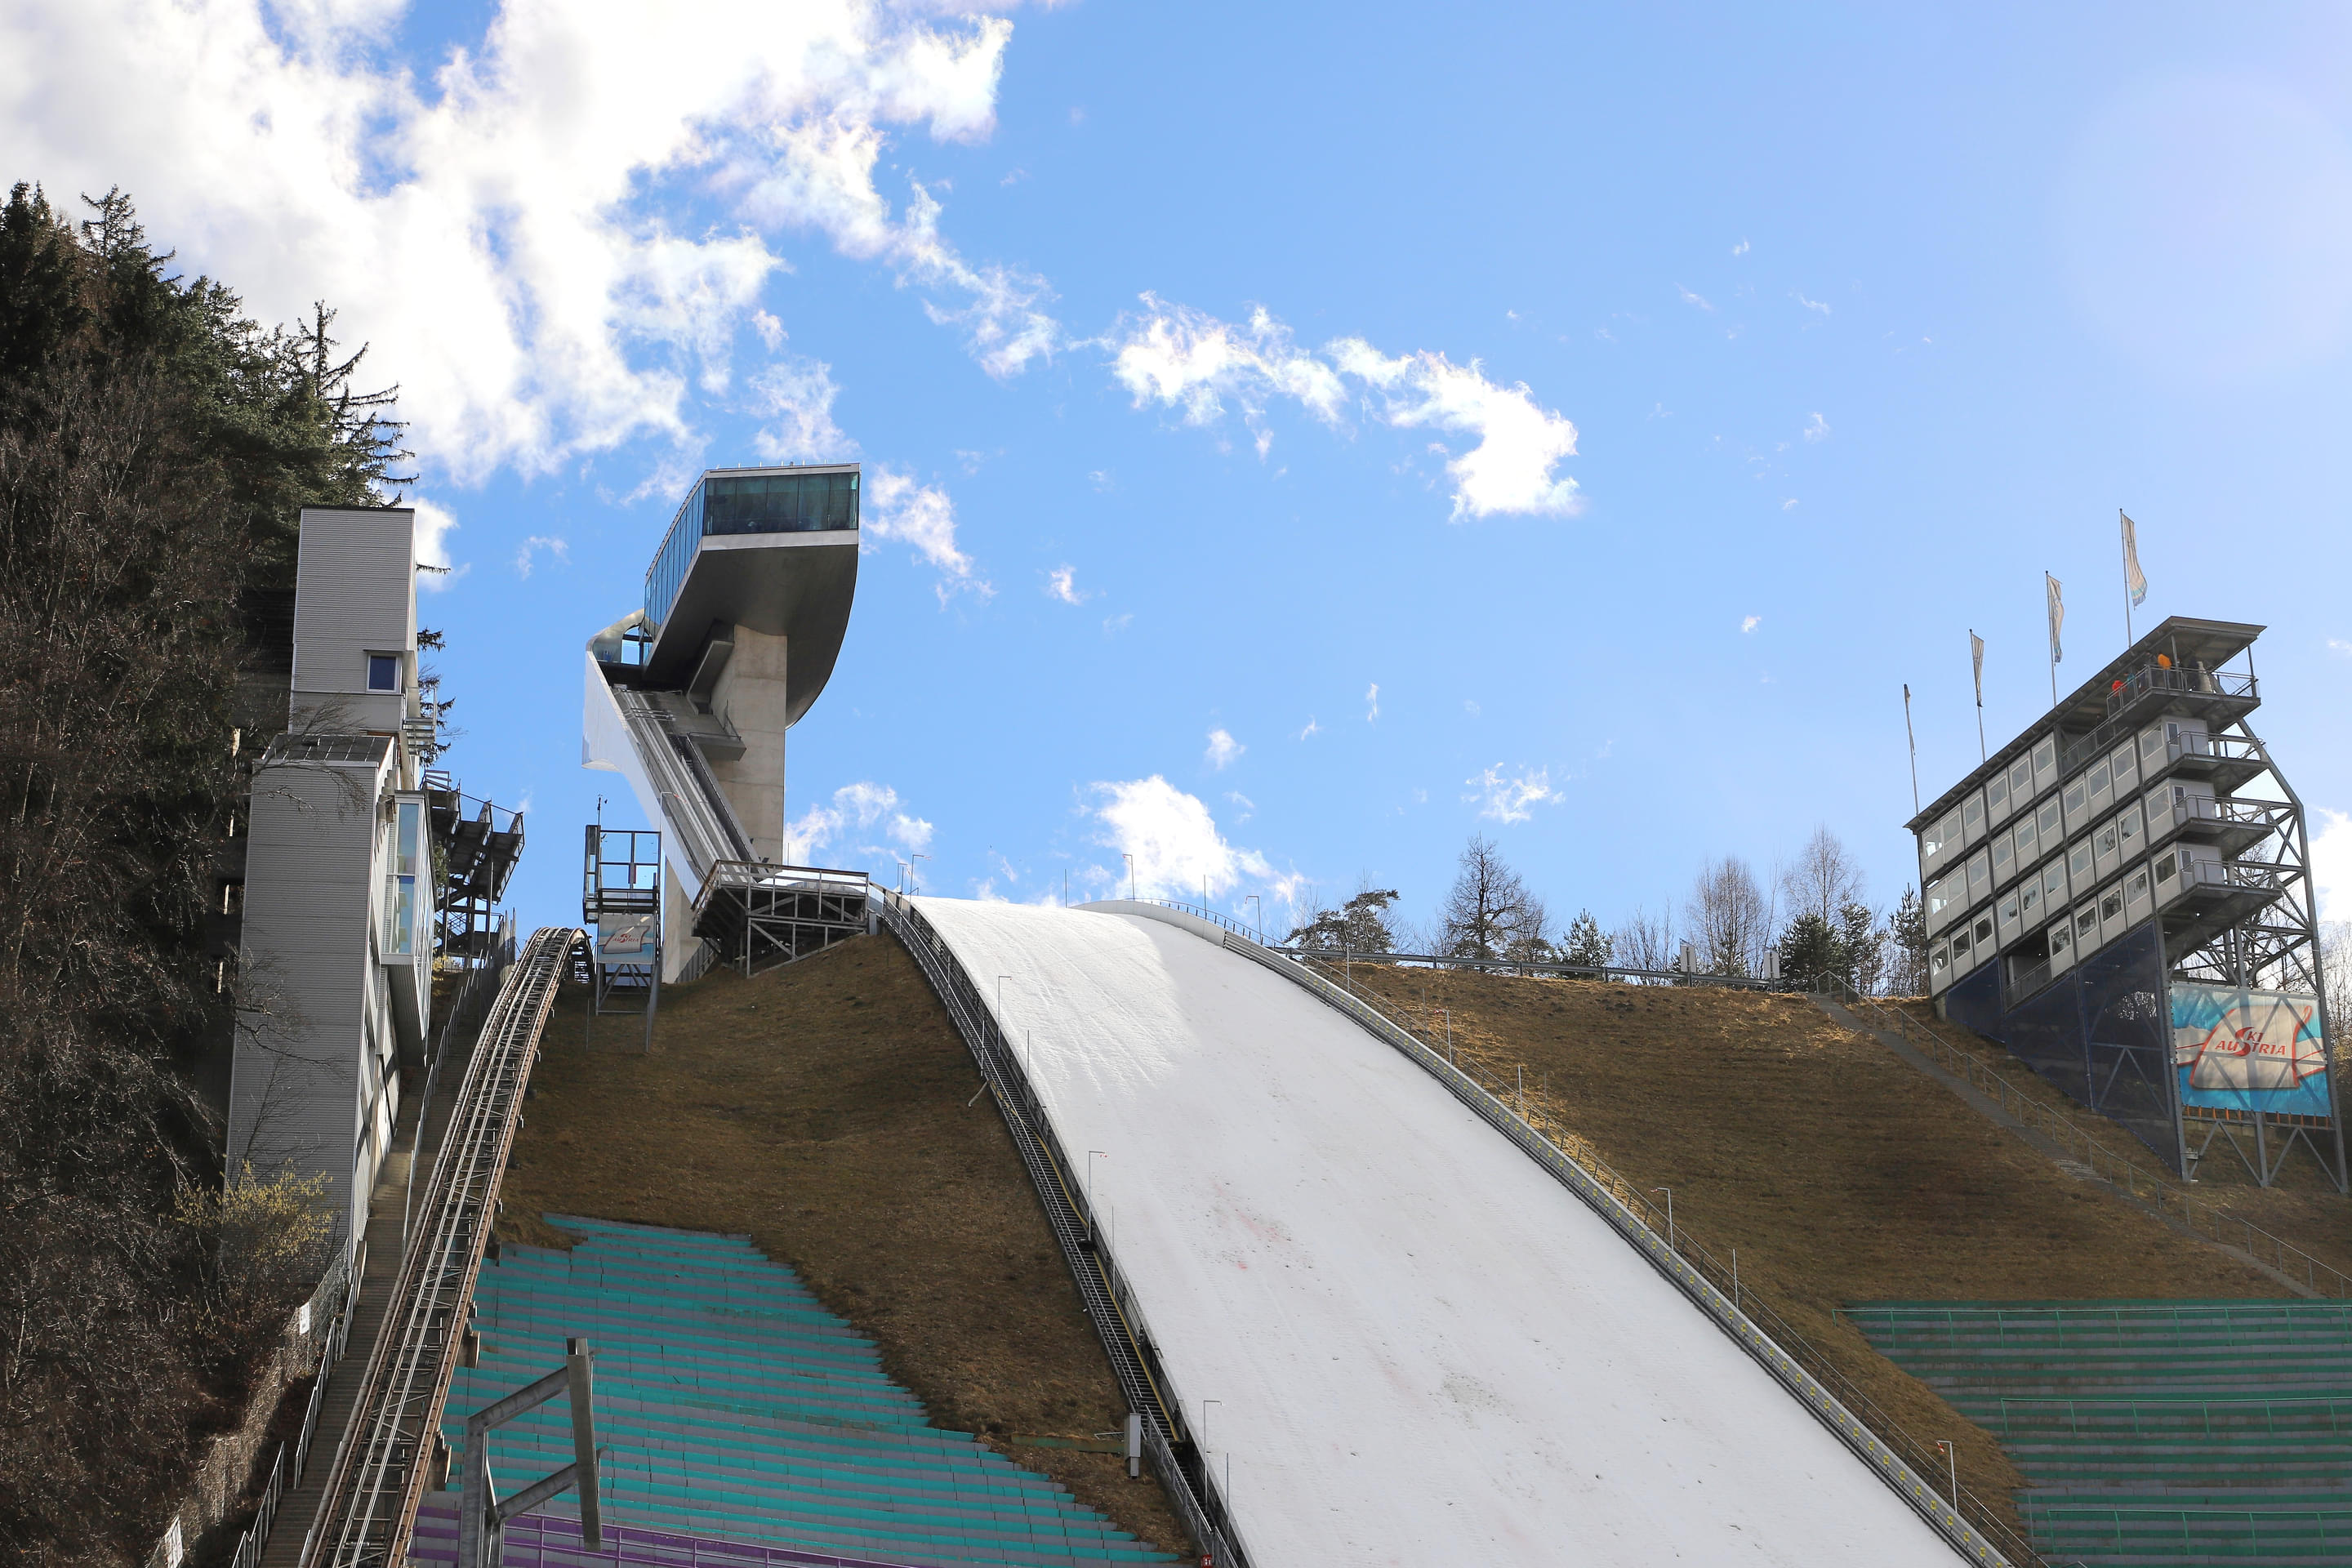 Bergisel Ski Jump Overview